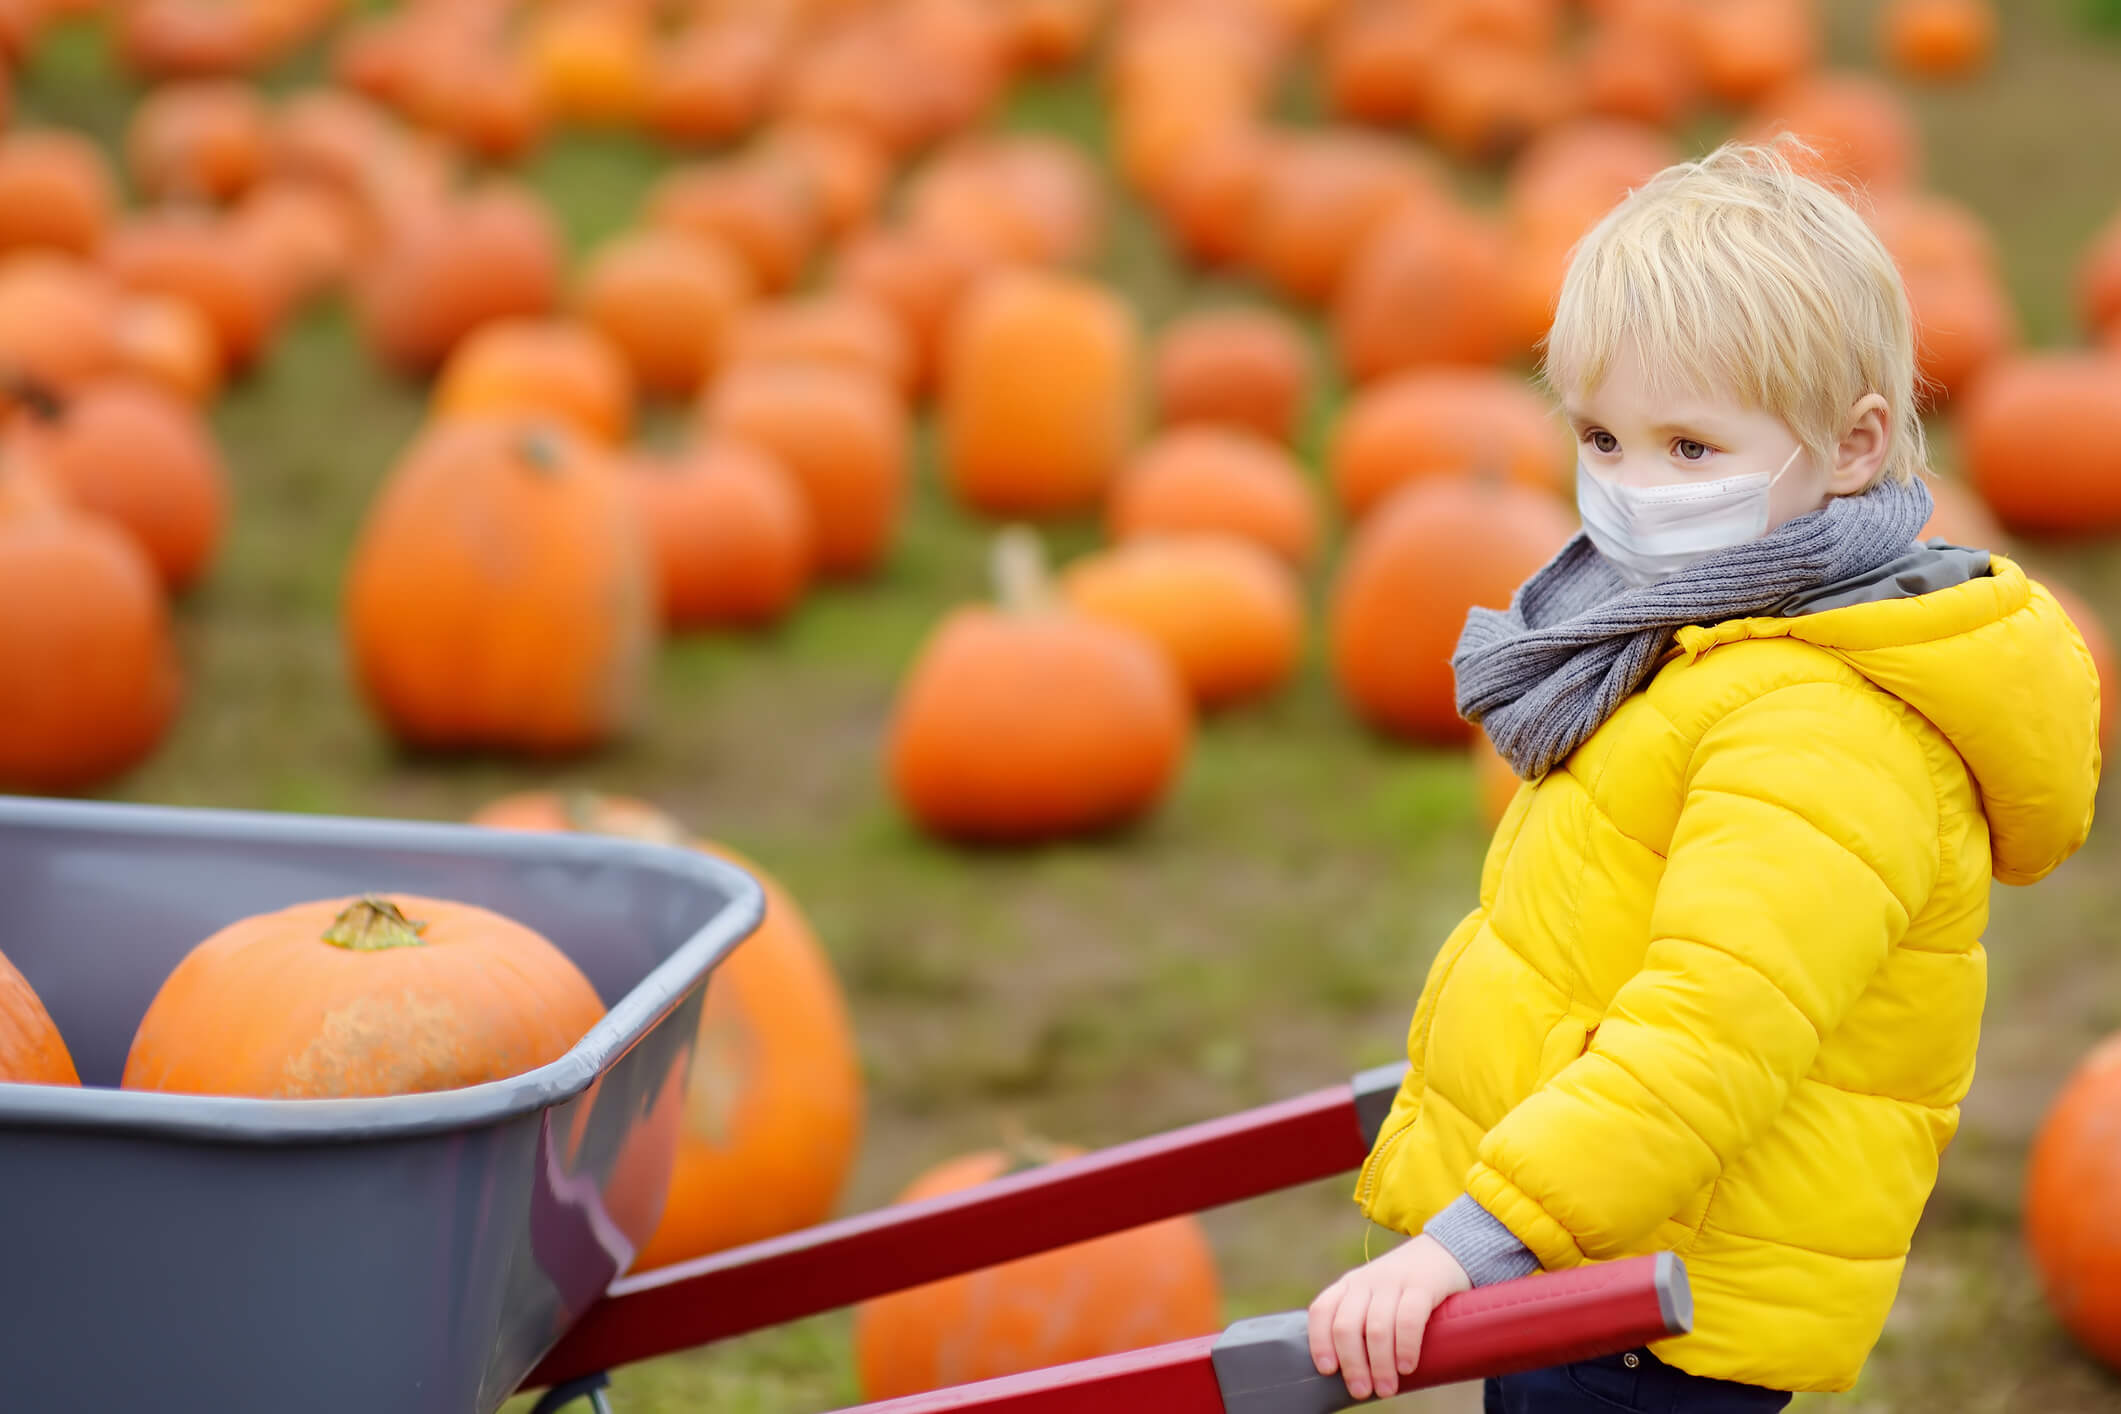 Little boy wearing face mask and keeping social distancing on tour of a pumpkin farm at autumn. Kid carriers wheelbarrow with pumpkins.